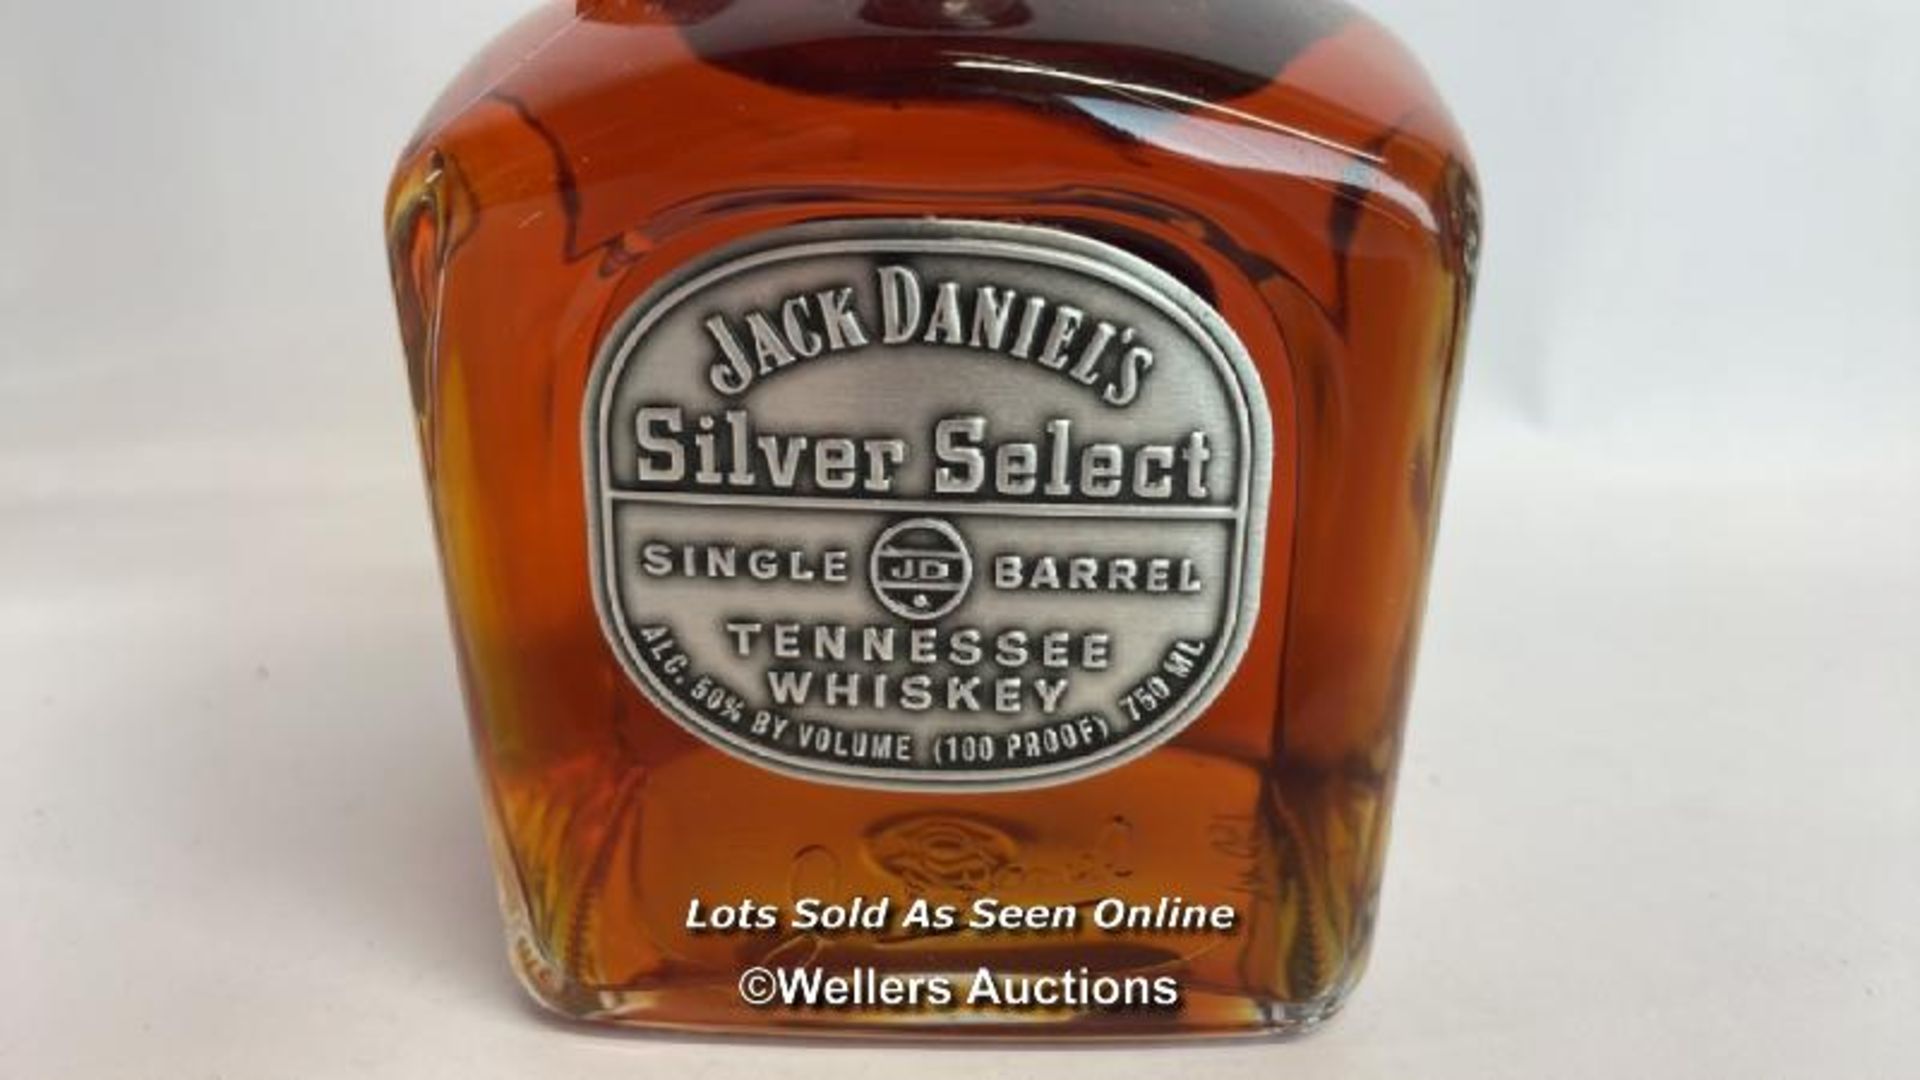 Jack Daniels Silver Select Single Barrel Tennessee Whiskey, Release date: 11-03-99, Barrek no: 9- - Image 6 of 8